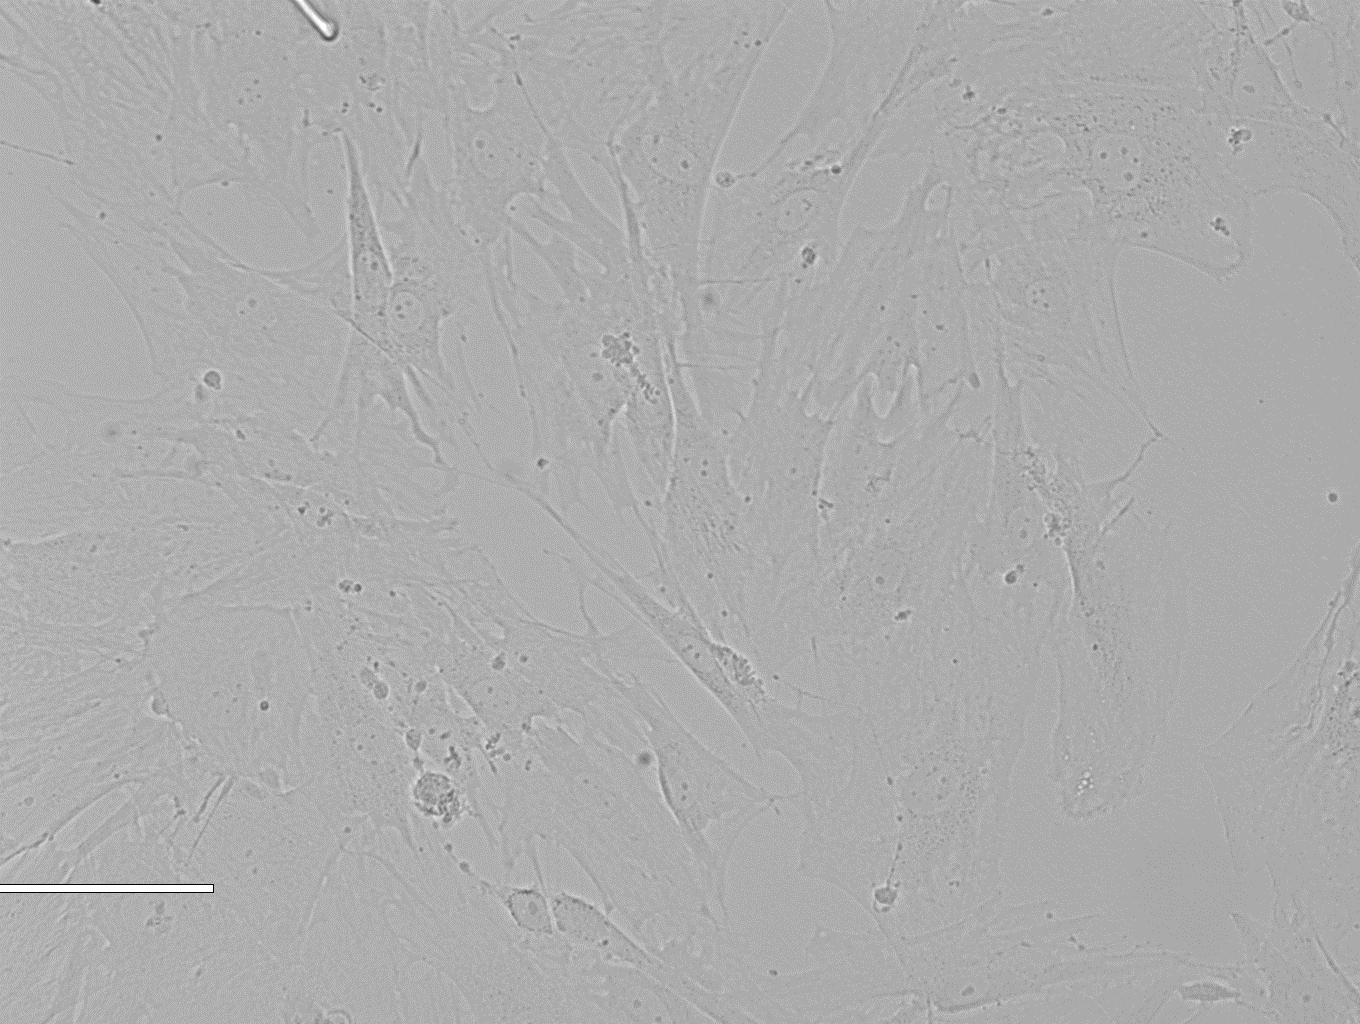 Rat Retinal Pigment Epithelial Cells 大鼠视网膜色素上皮细胞